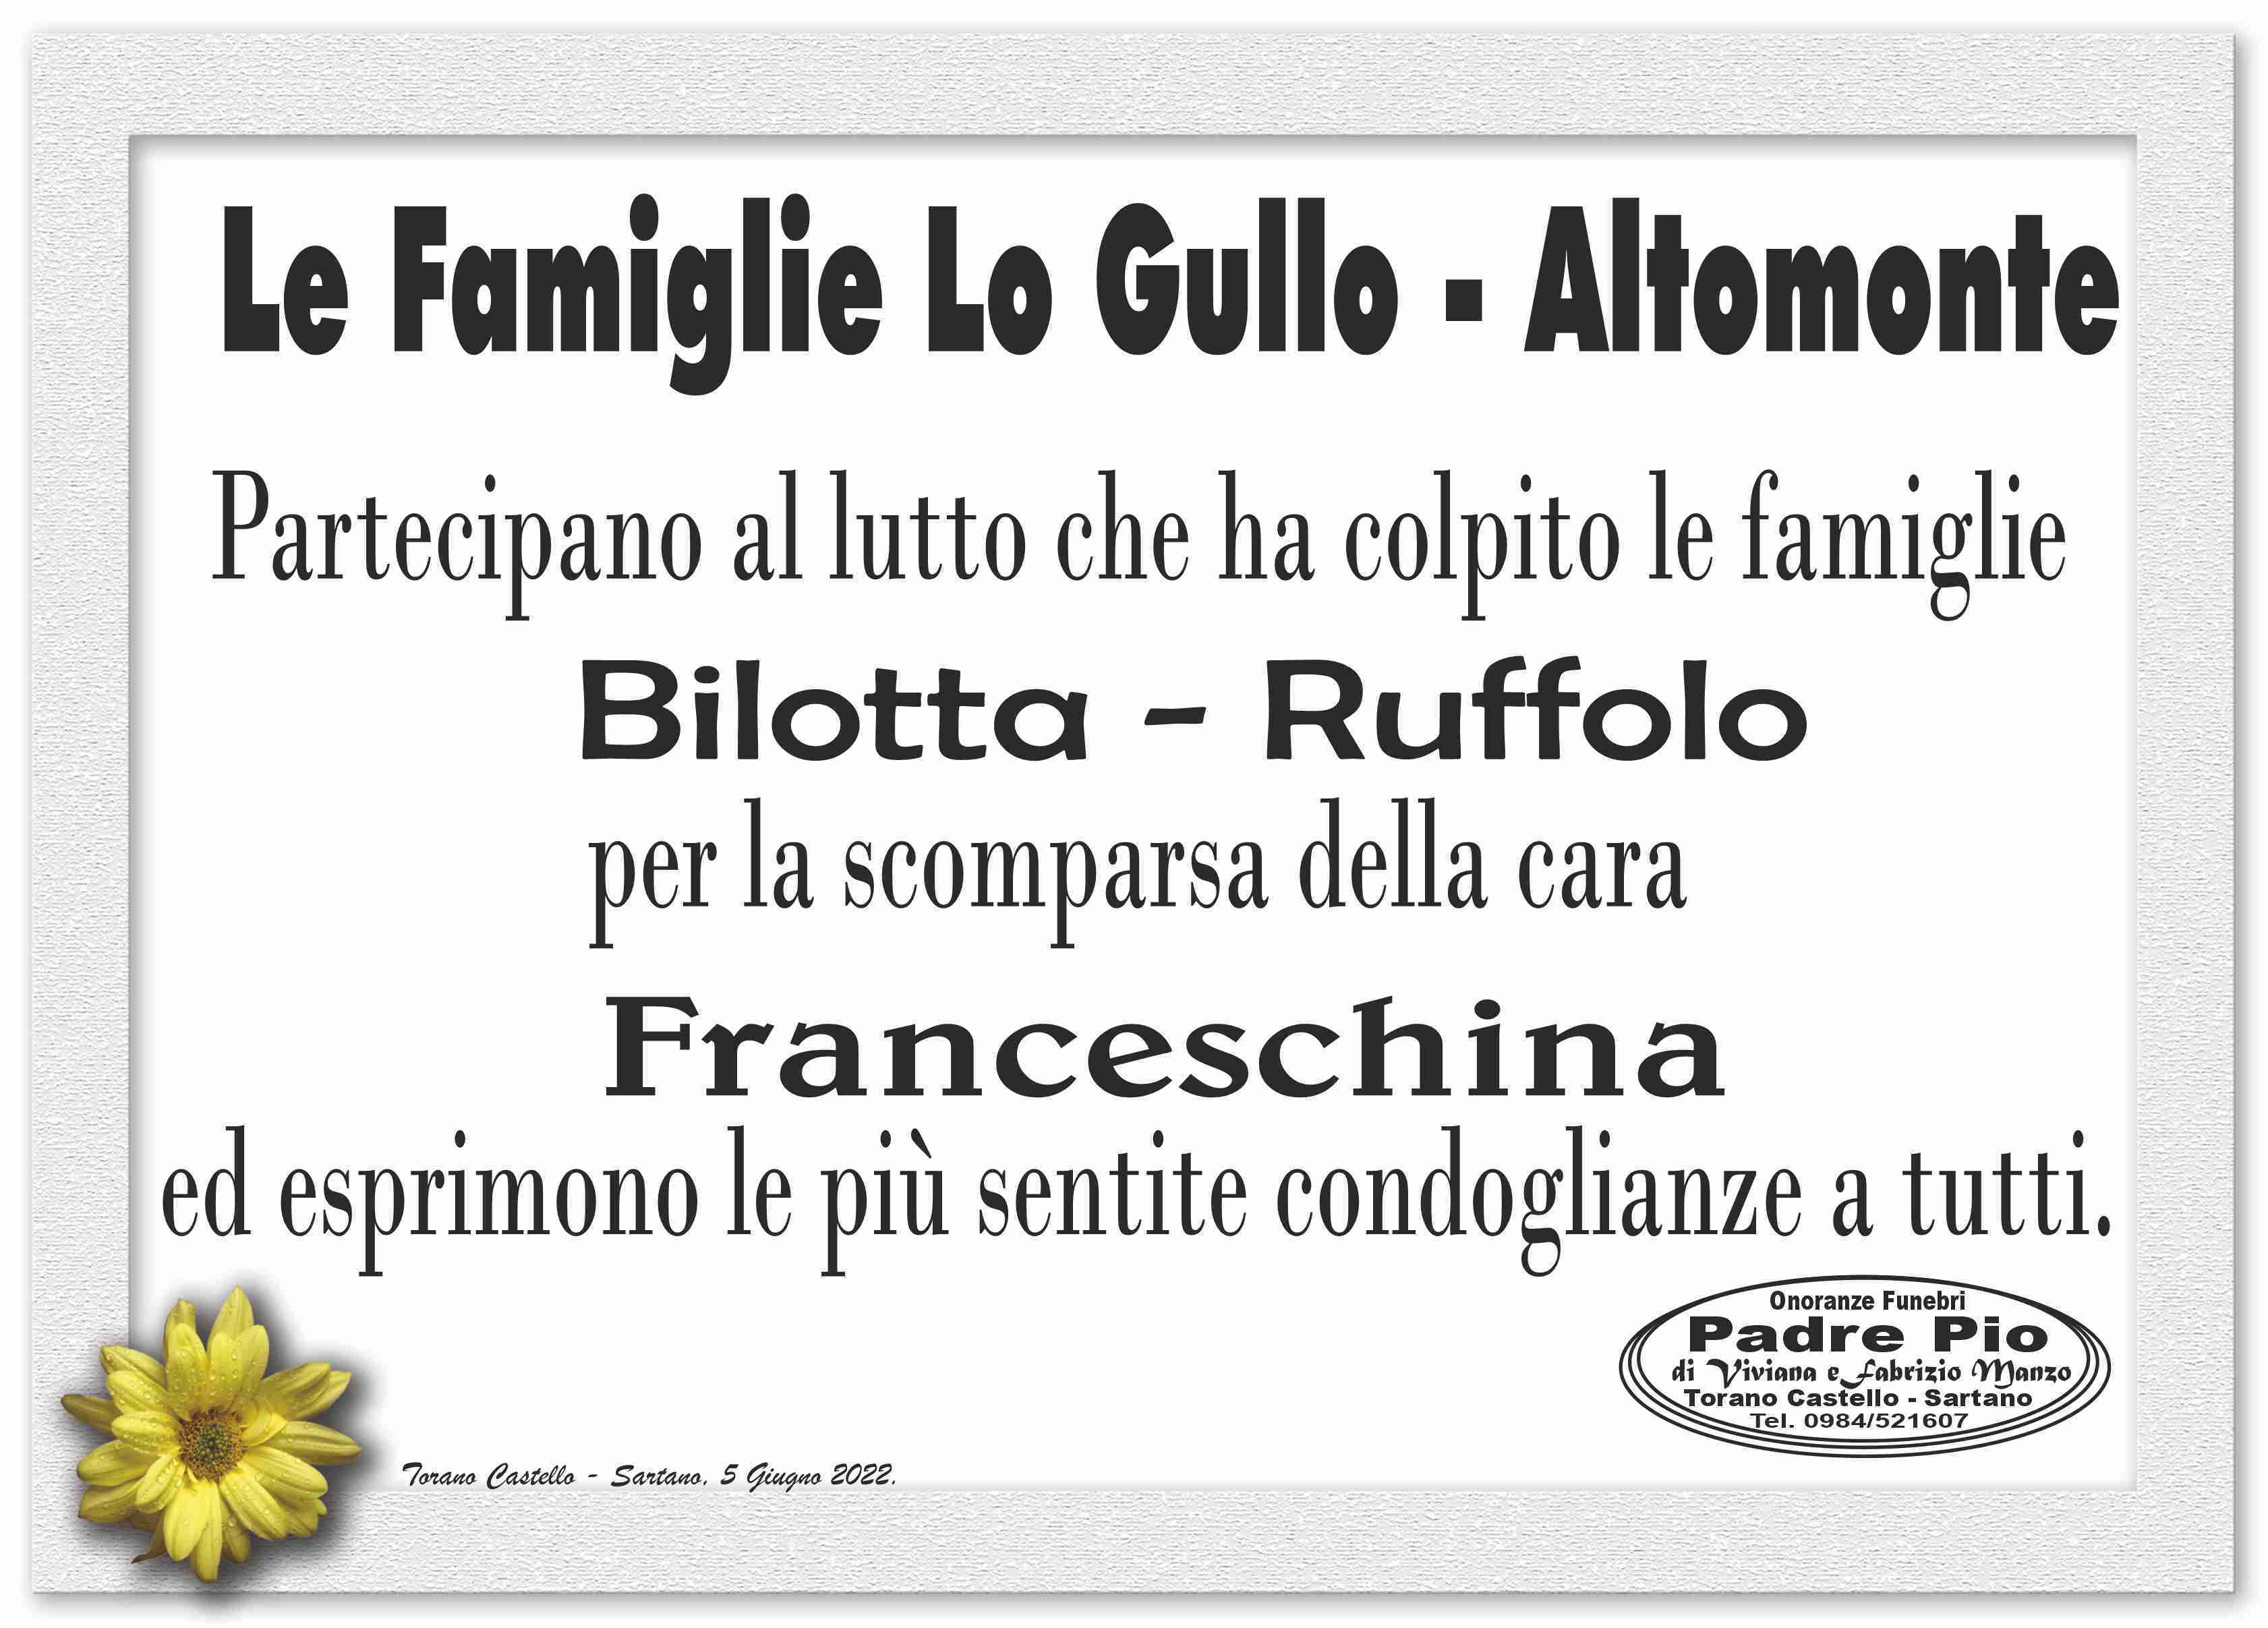 Franceschina Bilotta Ruffolo